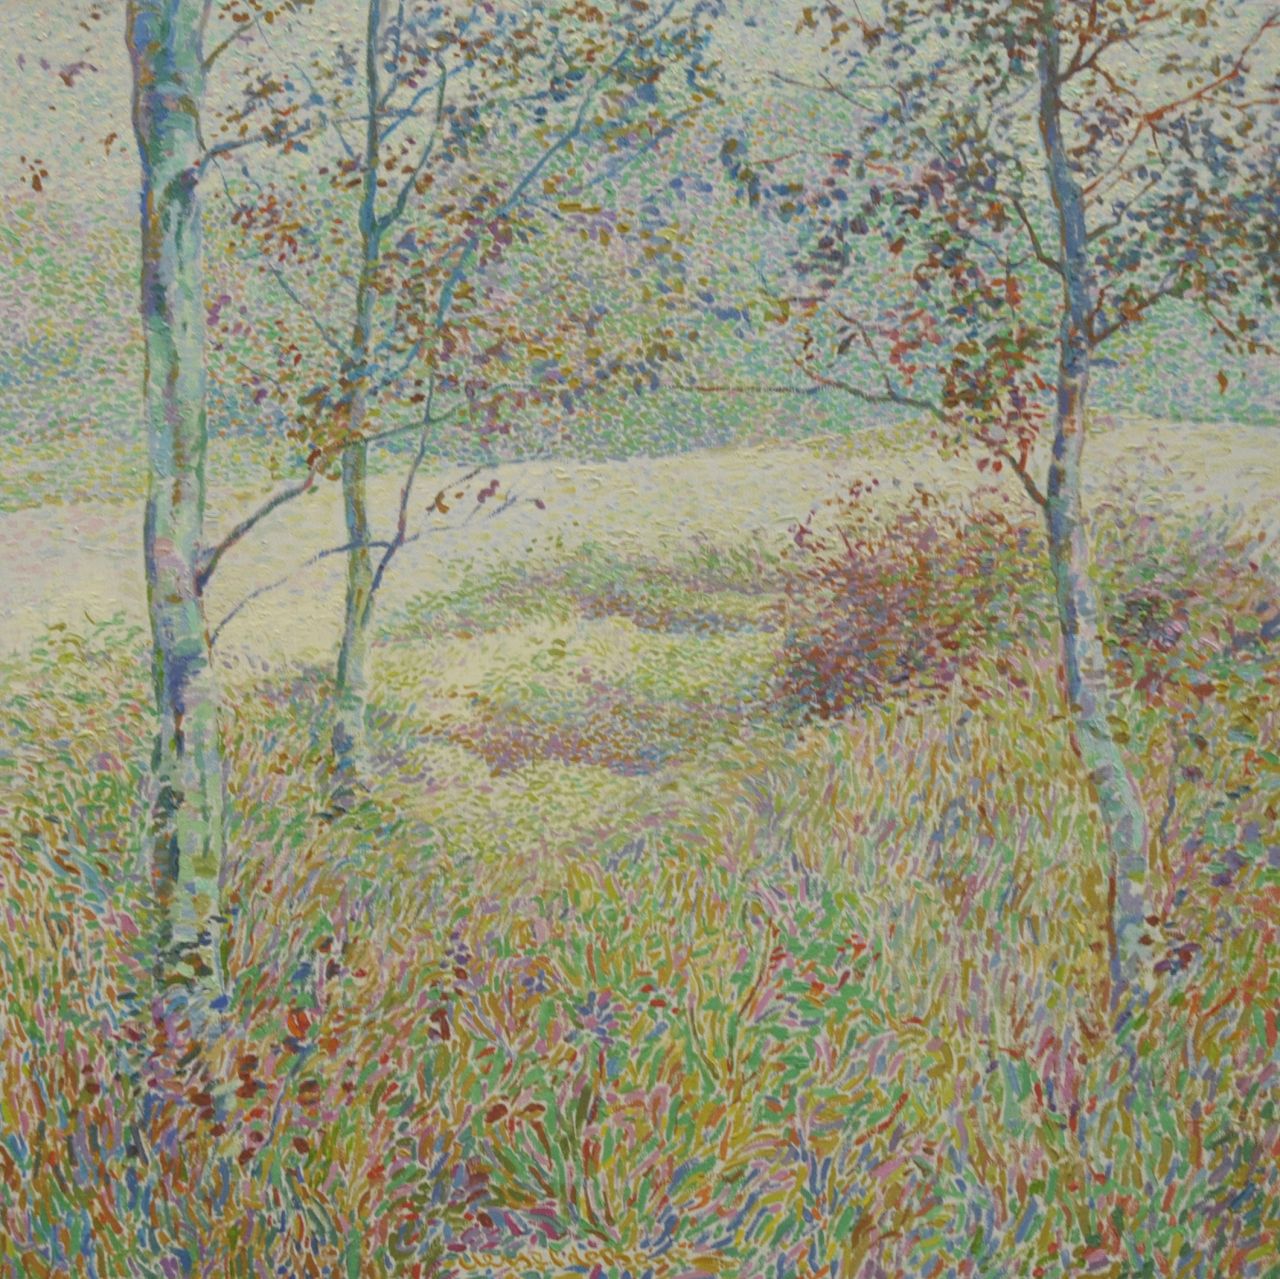 Boer H. de | Hessel de Boer | Paintings offered for sale | Birches, oil on canvas 69.0 x 69.0 cm, signed l.c.